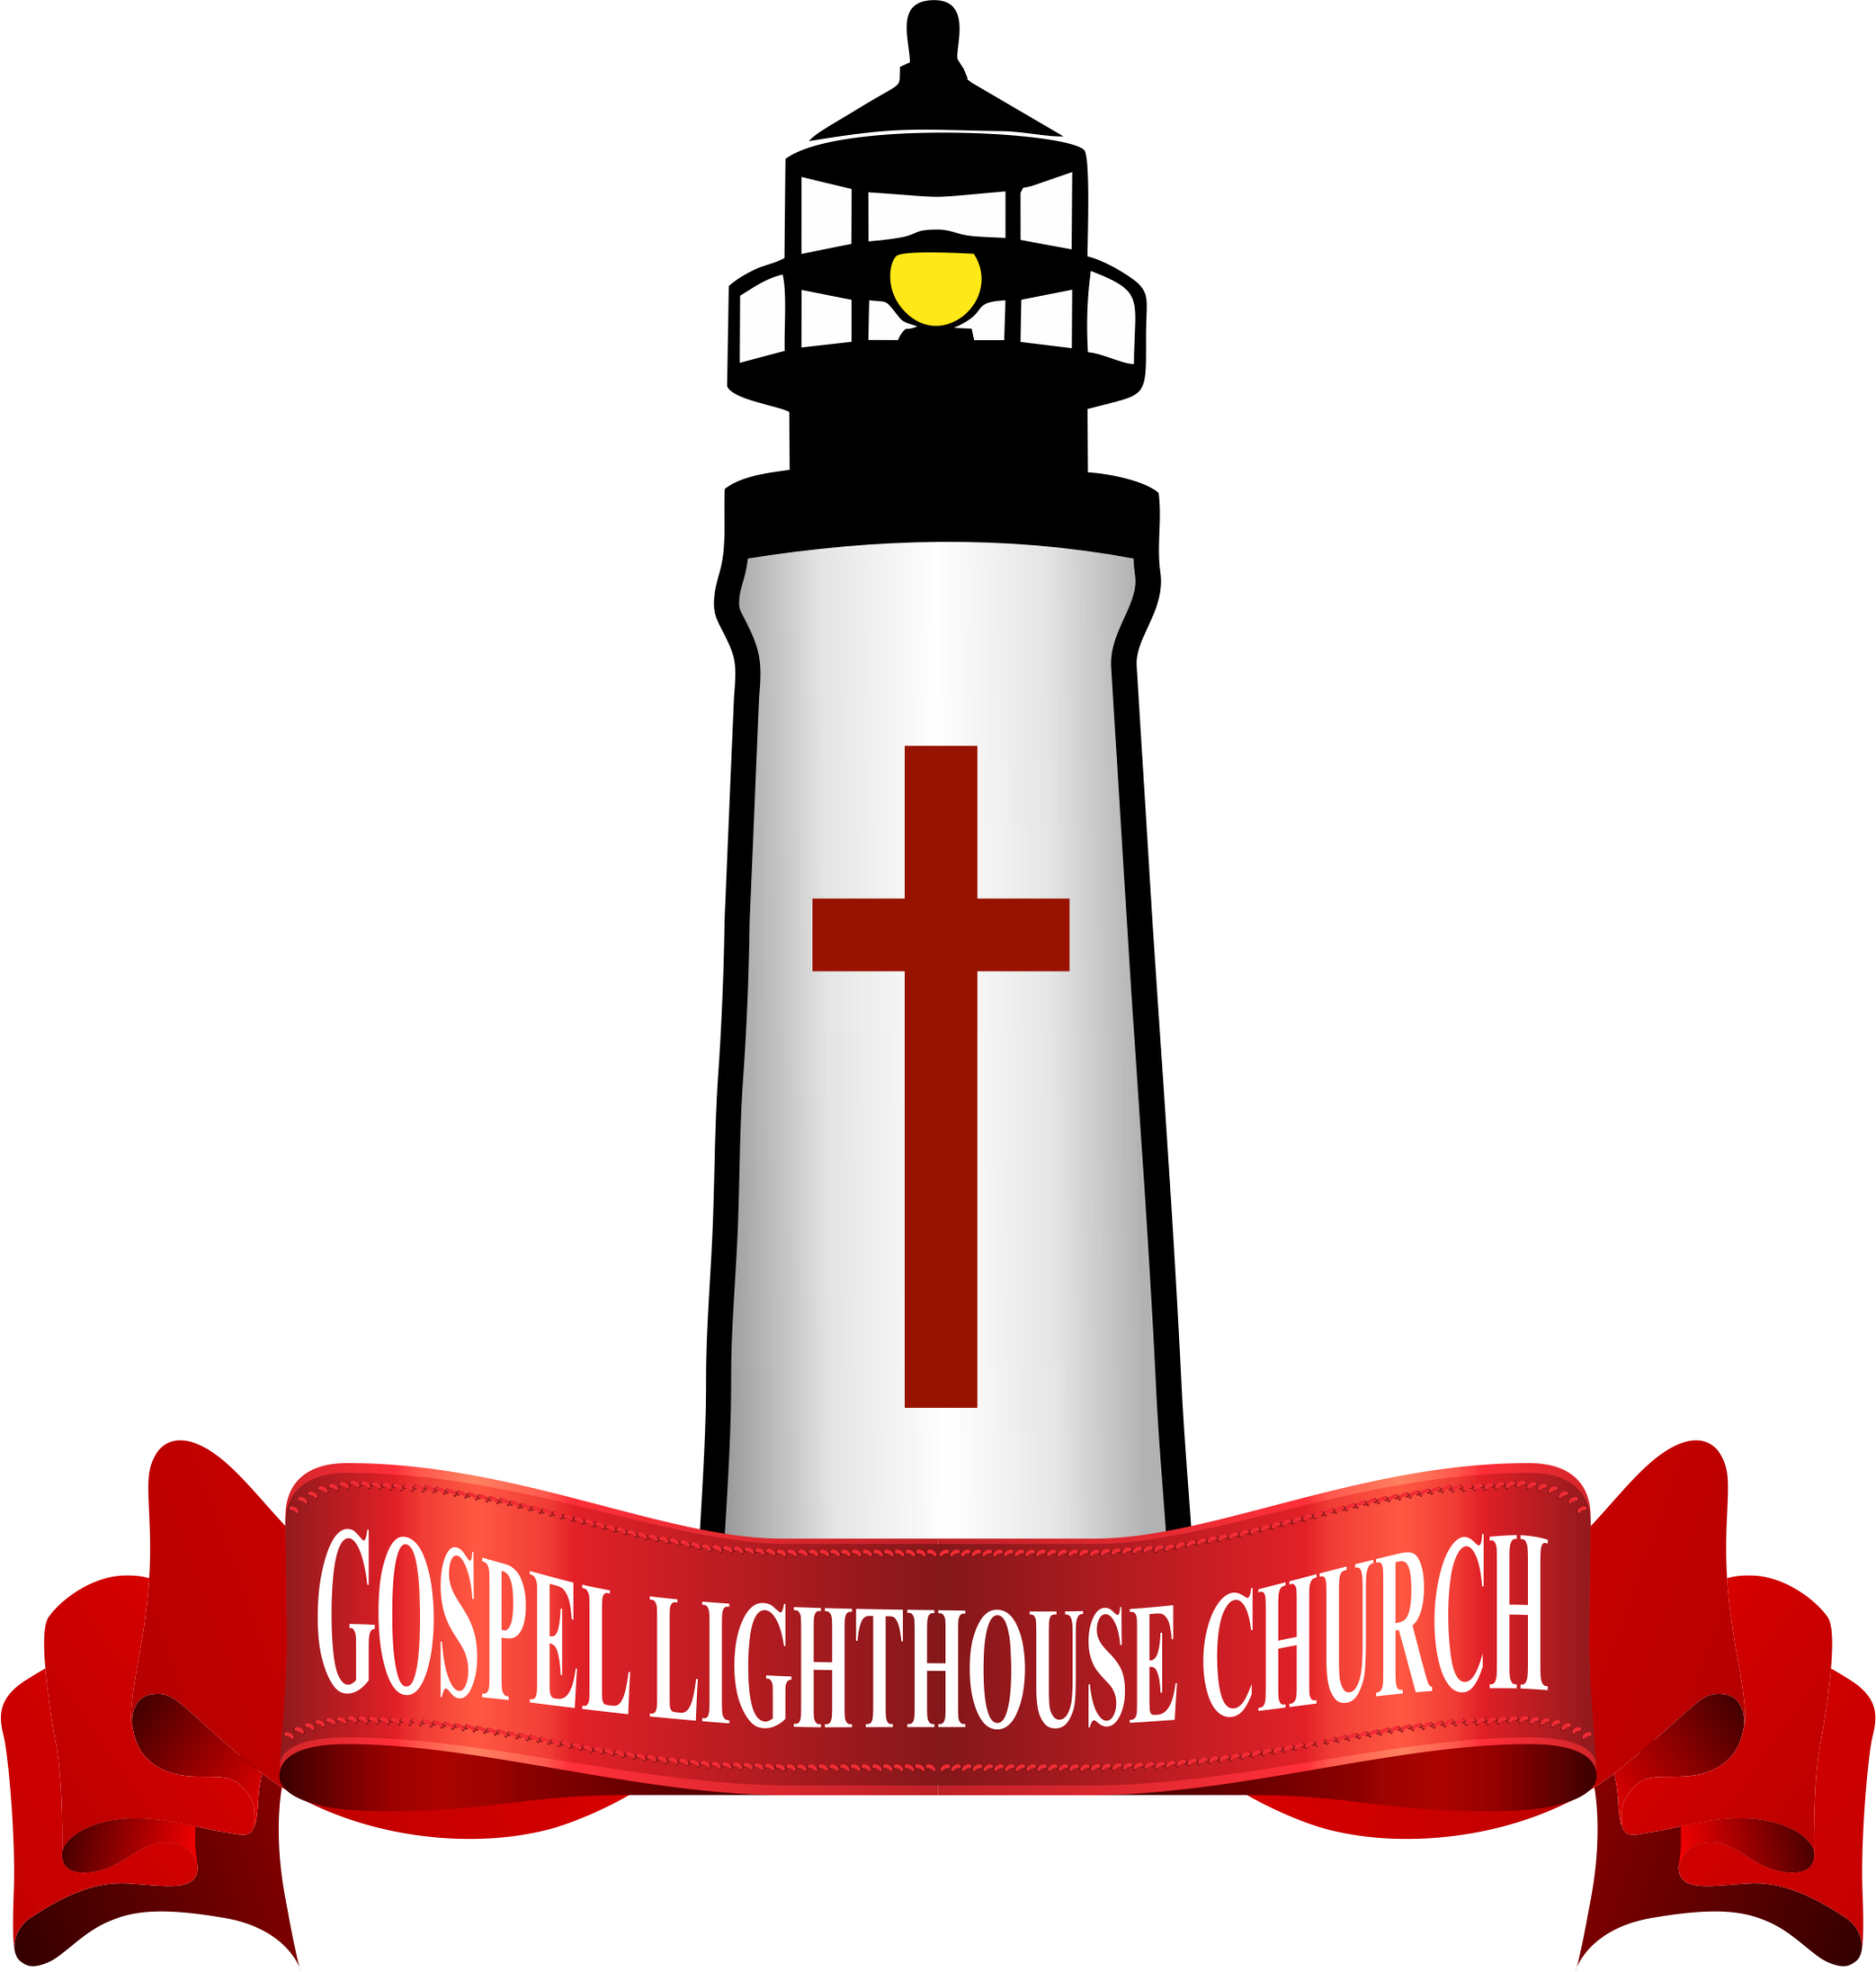 Everyone Is Welcome At Gospel Lighthouse Church - Sankaty Head Golf Club (1903x2000)